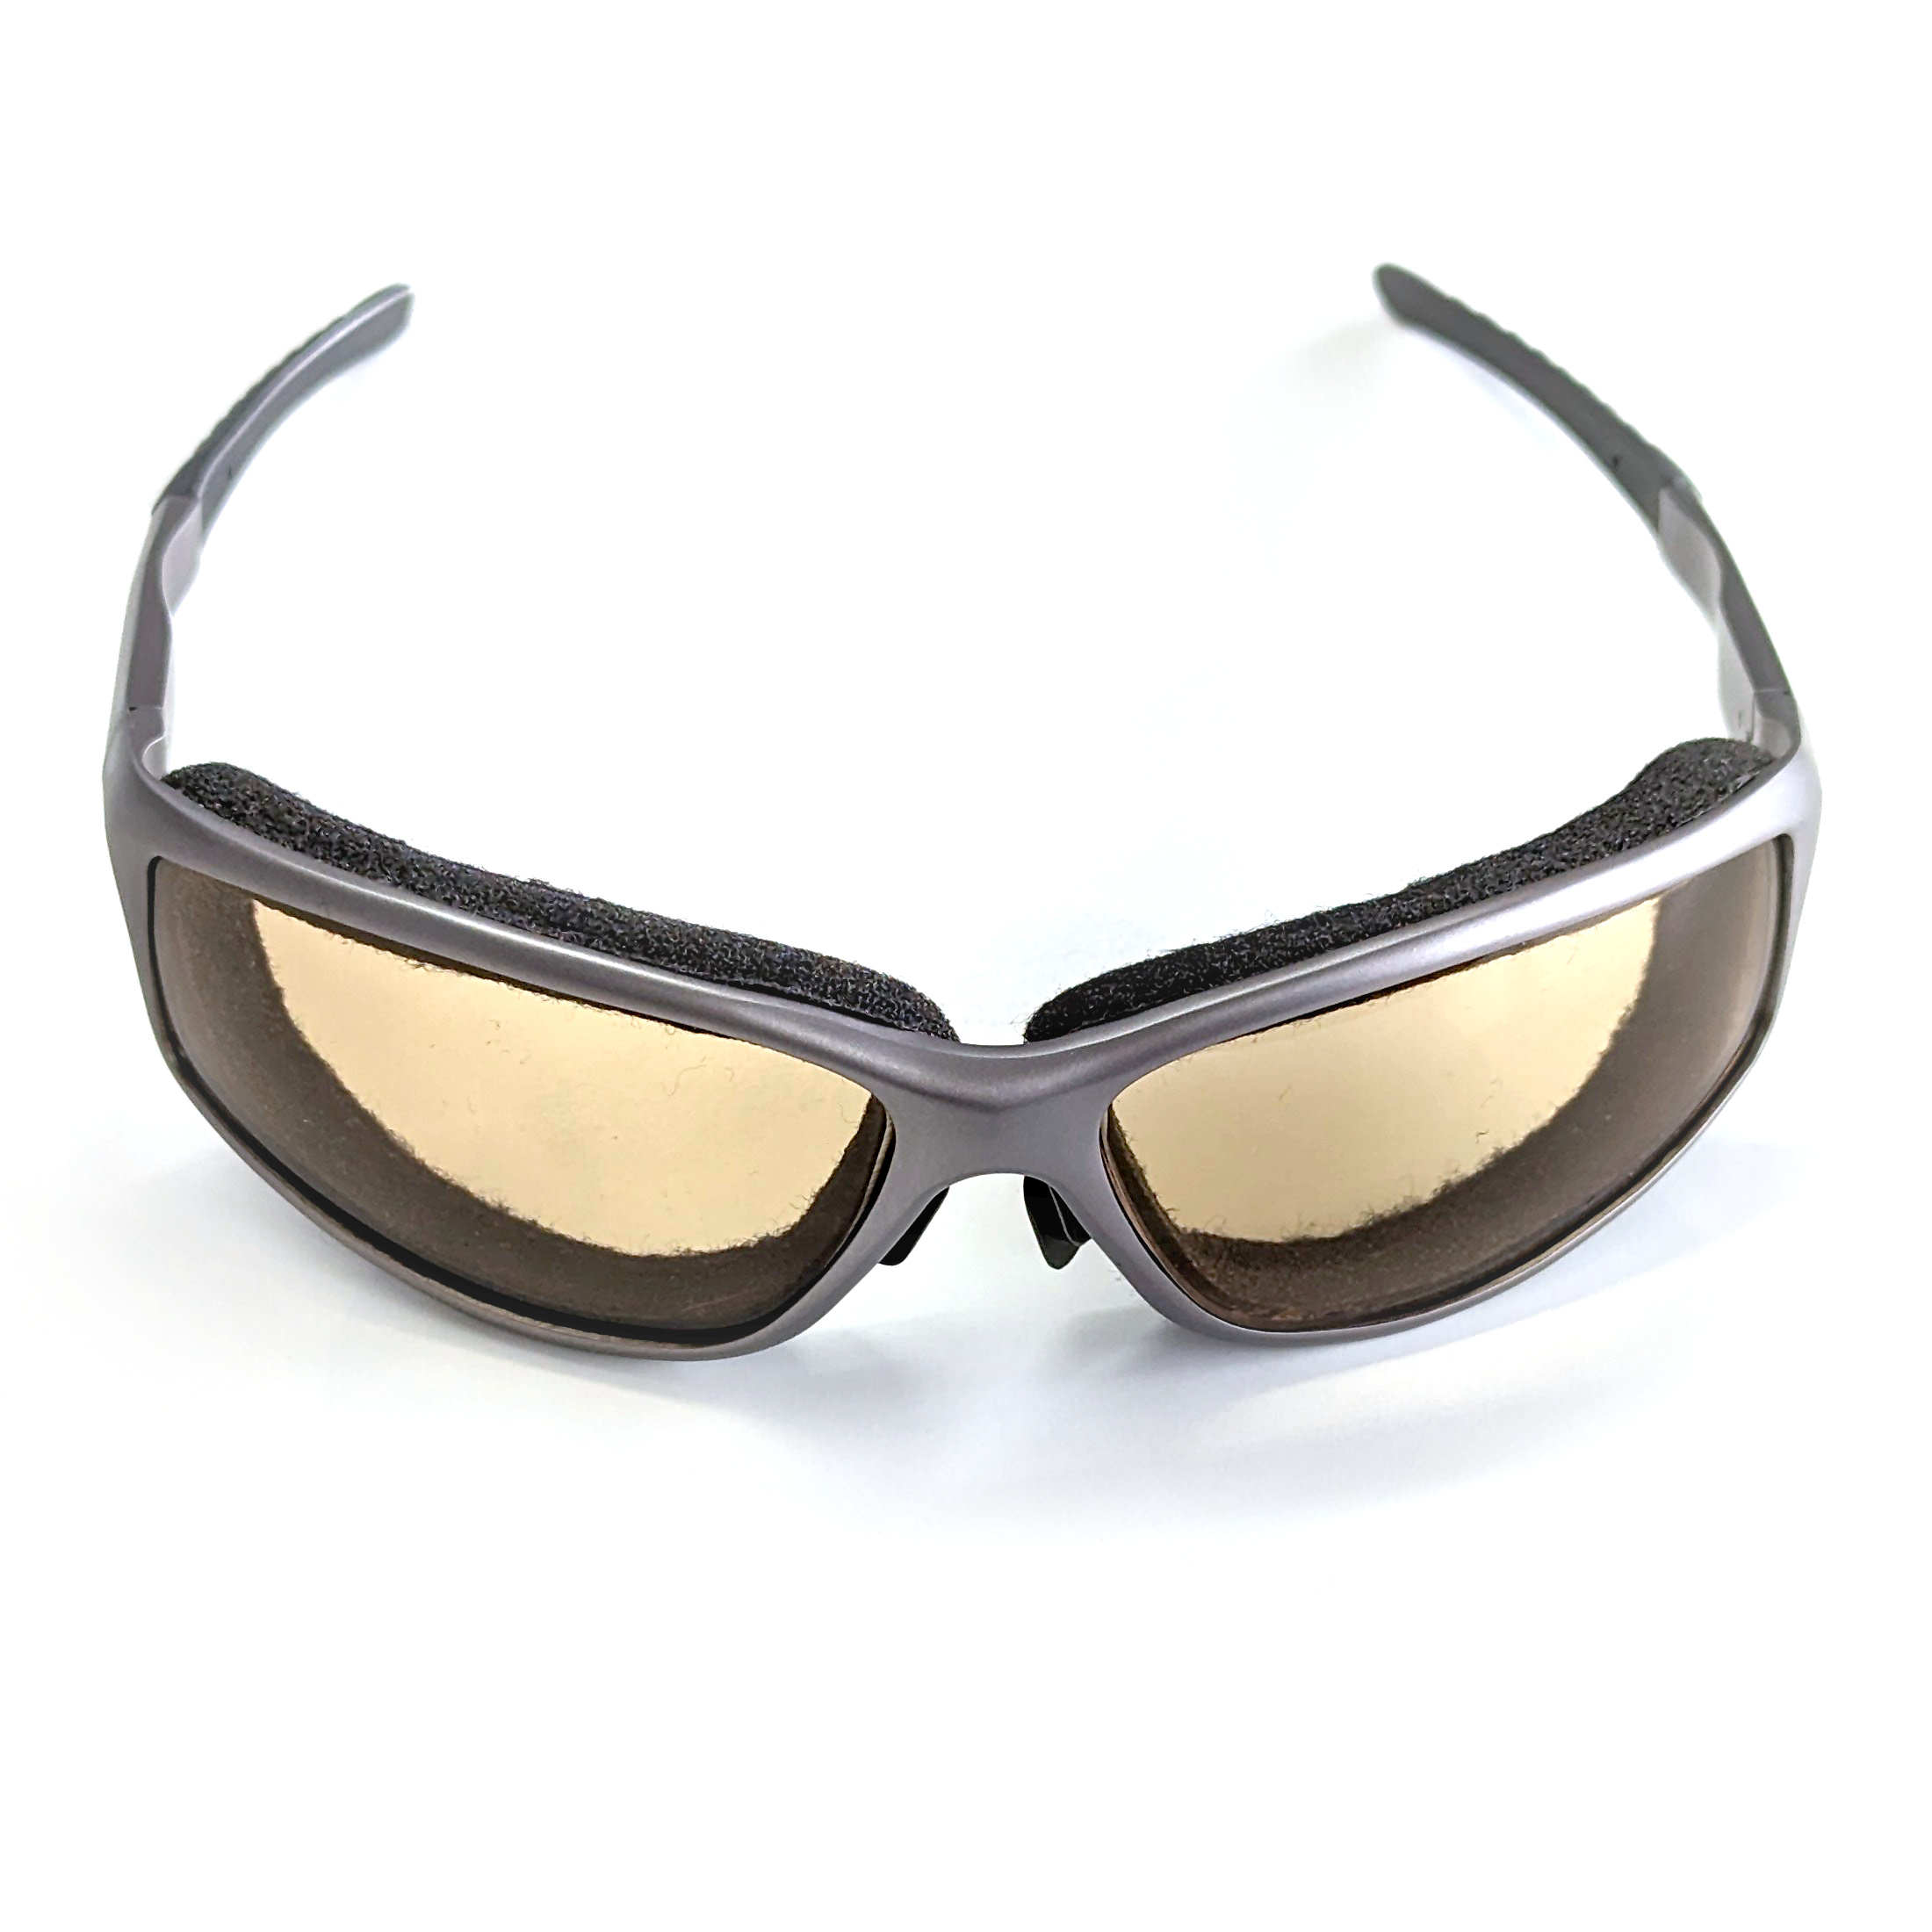 M4 Riding Glasses, Gray Metal Frame w/ Light Adjusting Anti-Fog Lens & Foam Pad - Click Image to Close